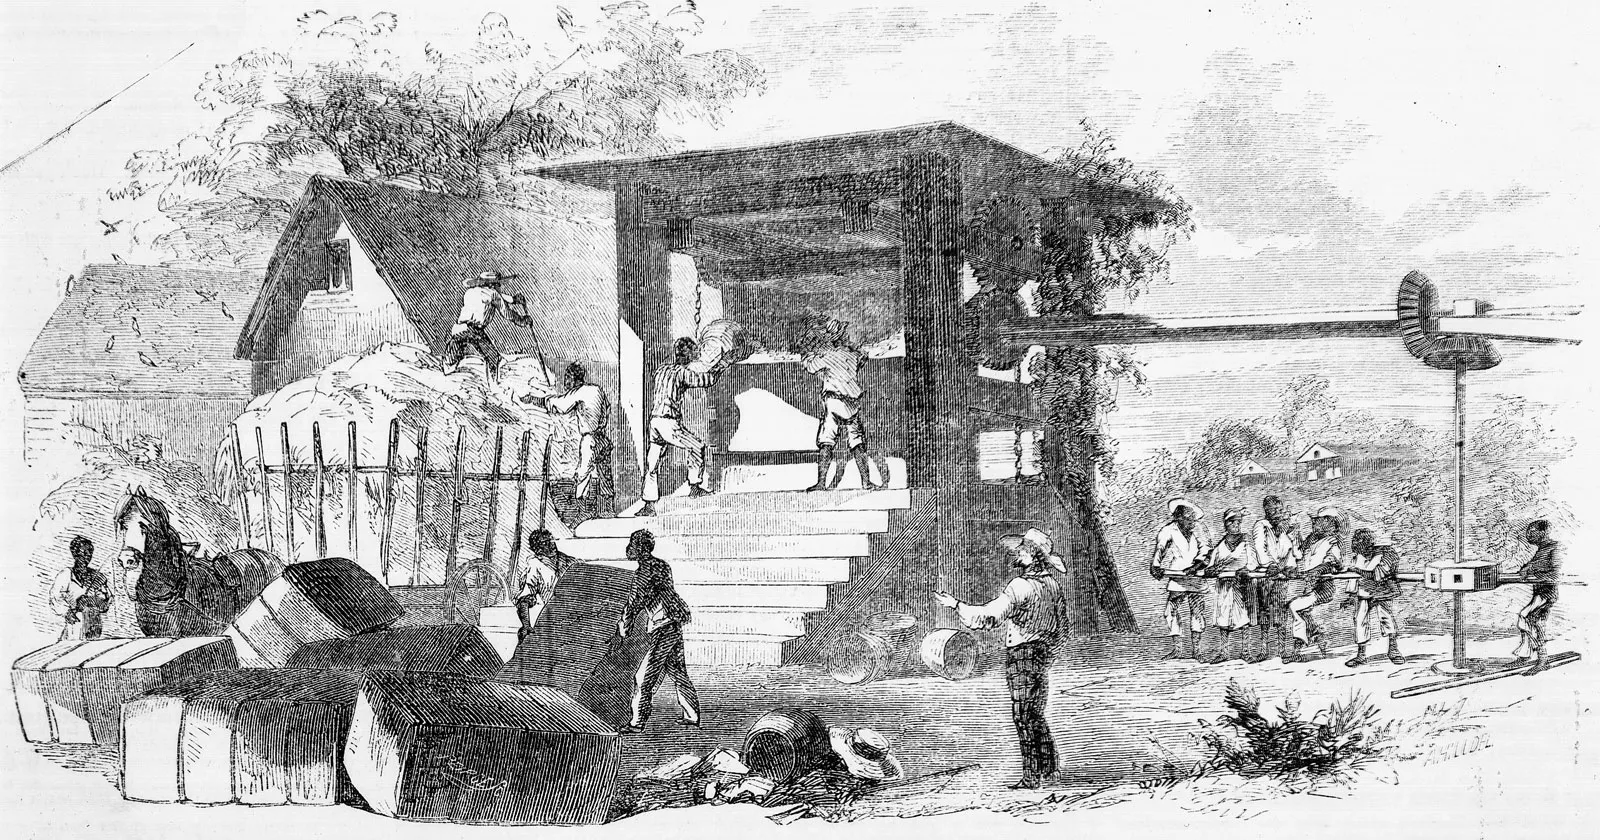 Cotton Pressing in Louisiana, Ballou's Pictorial Drawing-Room Companion, vol. X, no. 15 (April 12, 1856), p. 236. (Library of Congress)